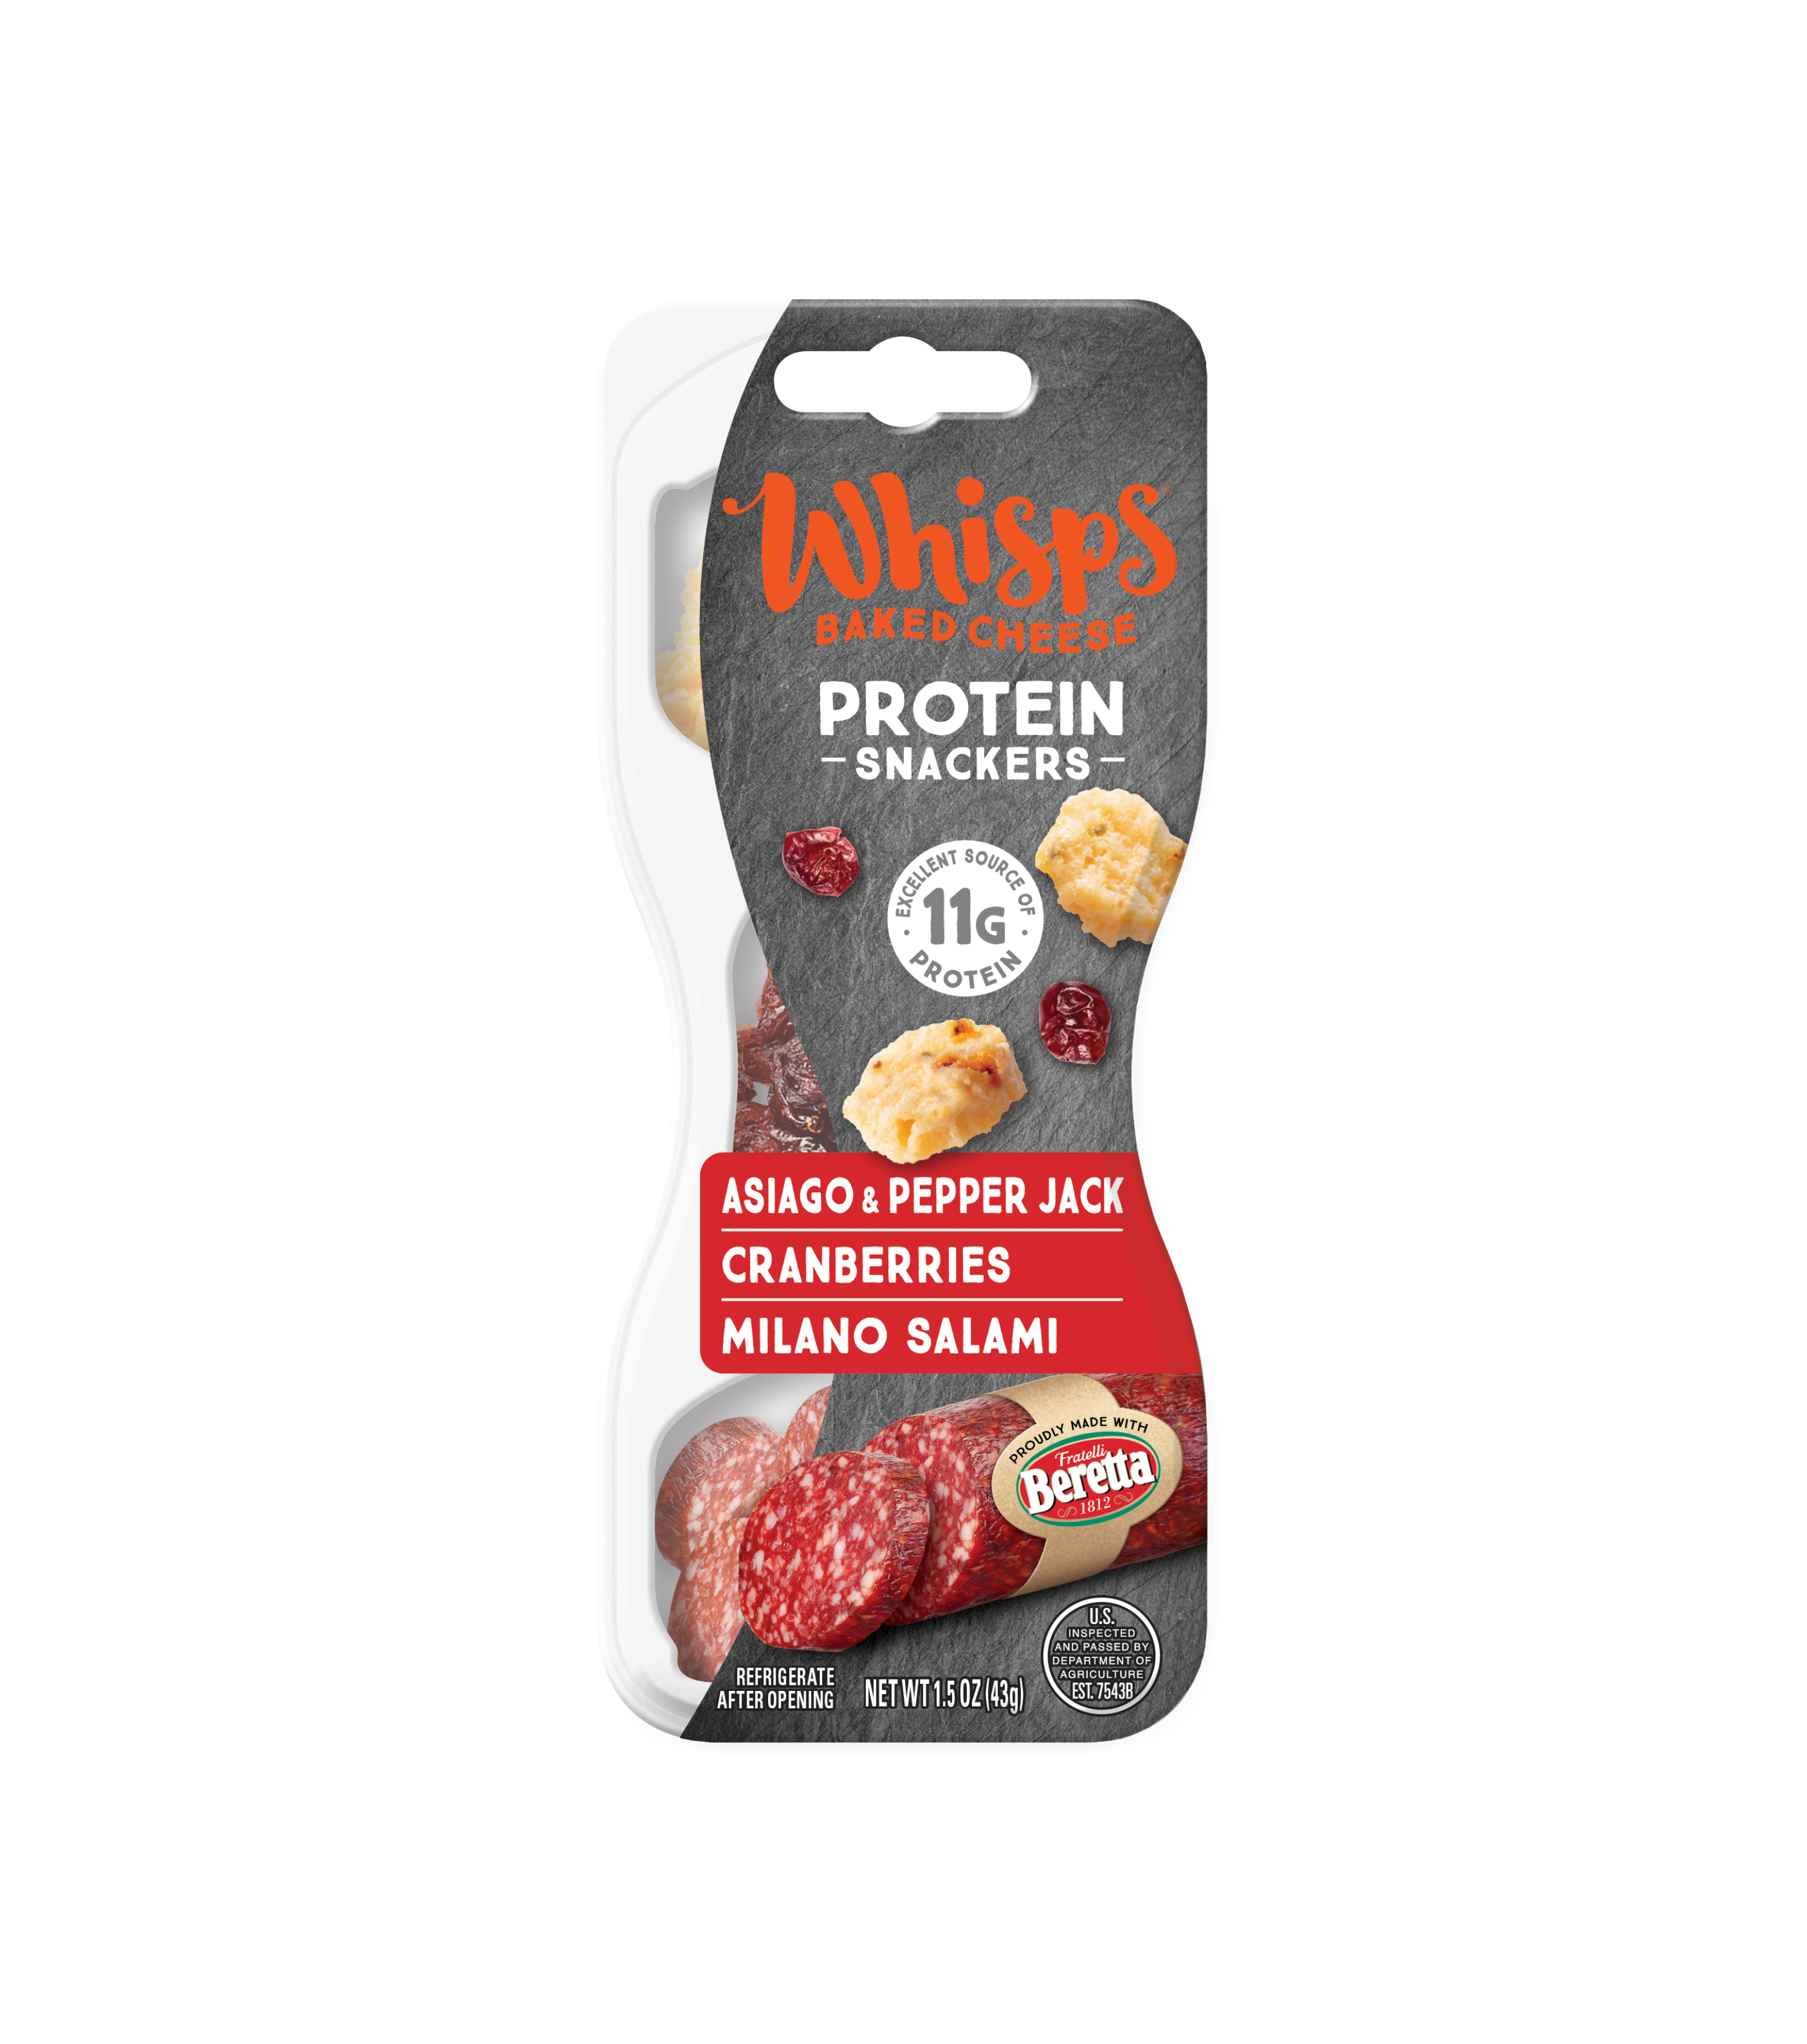 Asiago & Pepper Jack, Cranberries, Milano Salami Protein Snackers